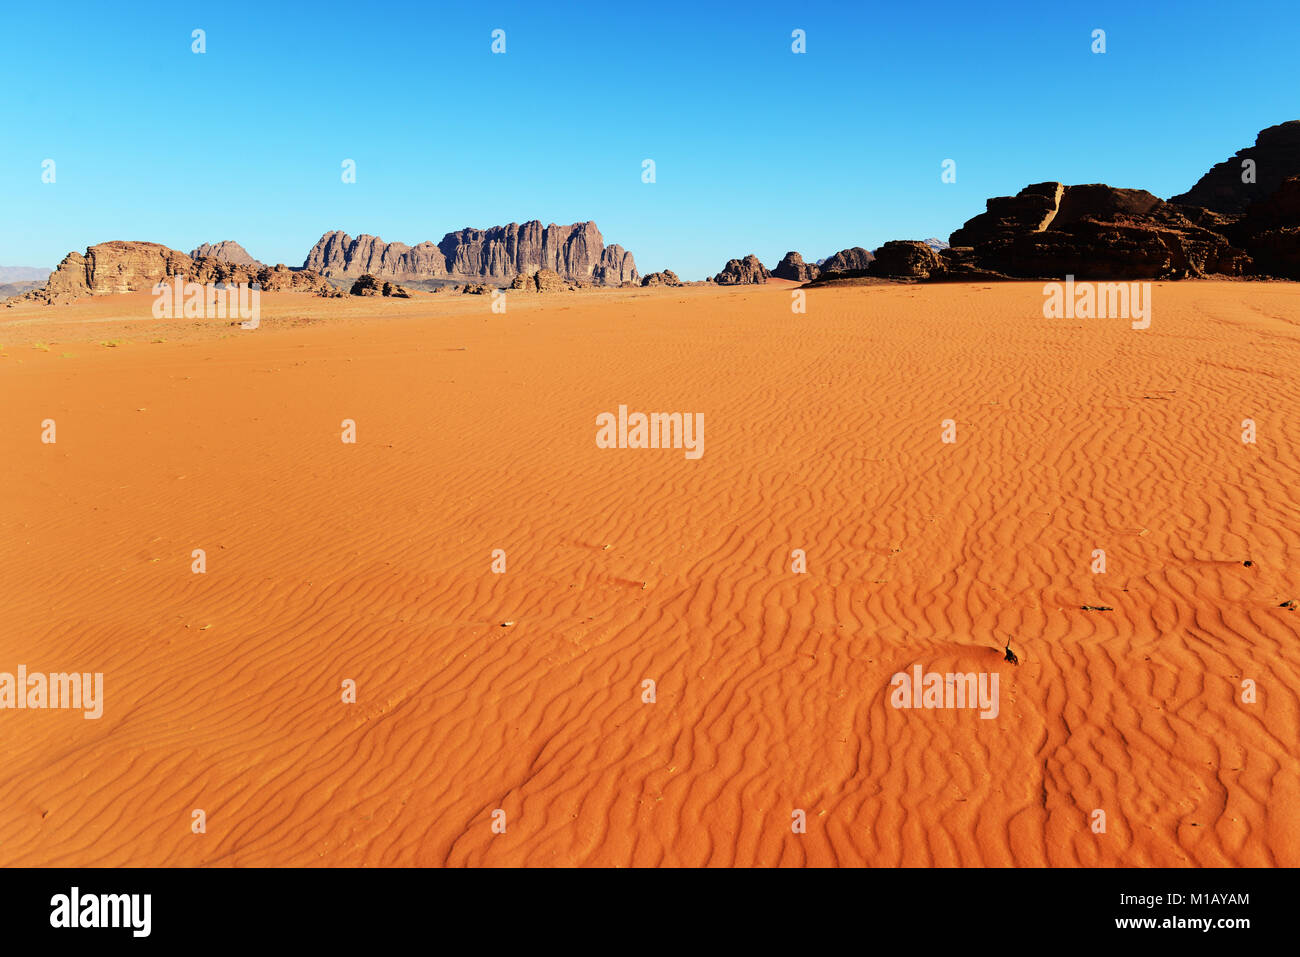 Dramatic desert landscapes in Wadi Rum, Jordan. Stock Photo